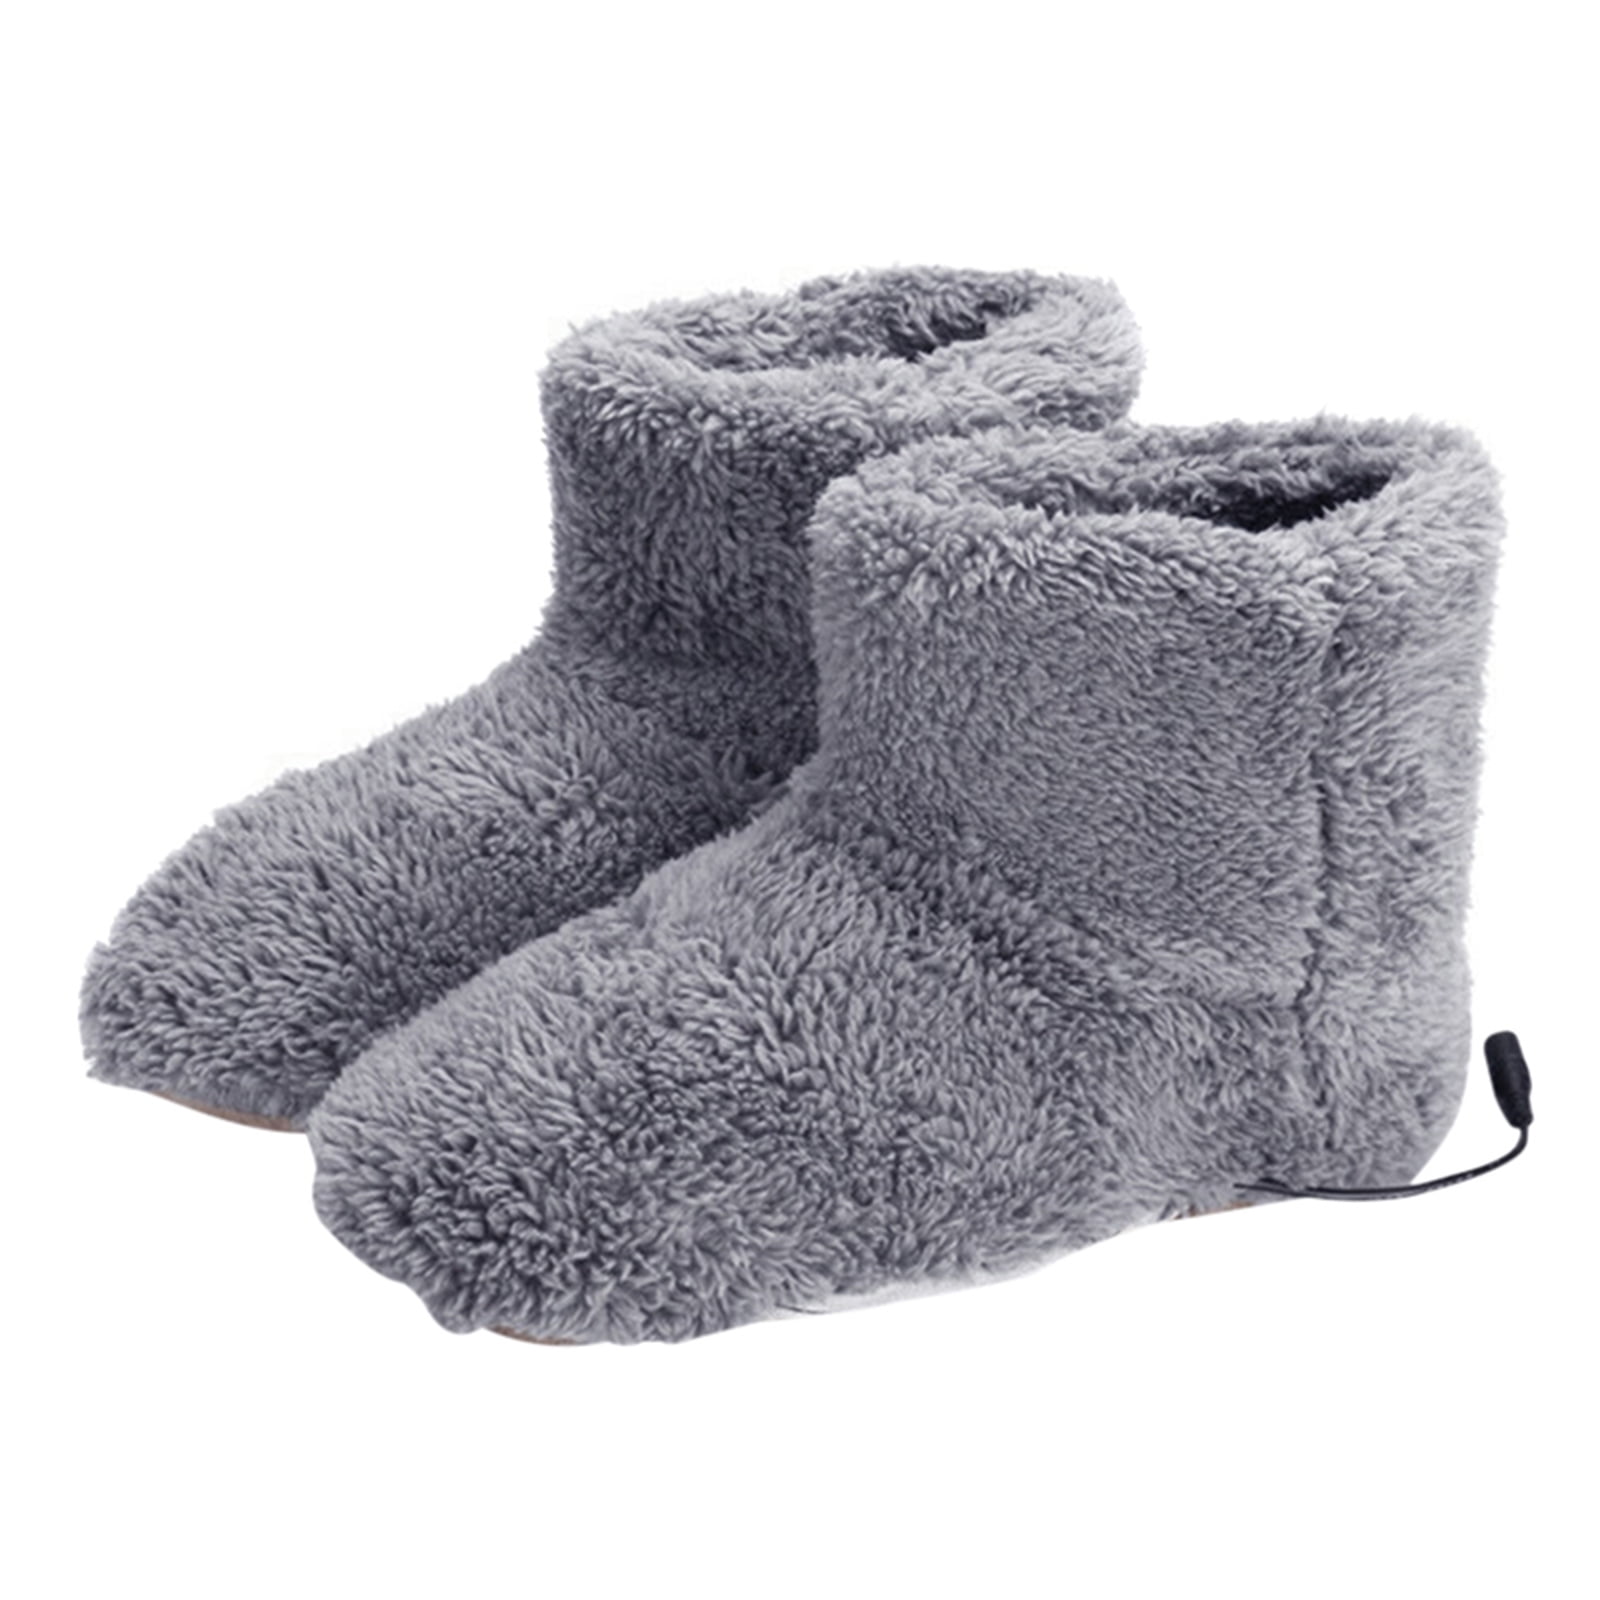 Winter USB Warmer Foot Shoes Plush Warm Cute Electric Slipper Feet Boots New 